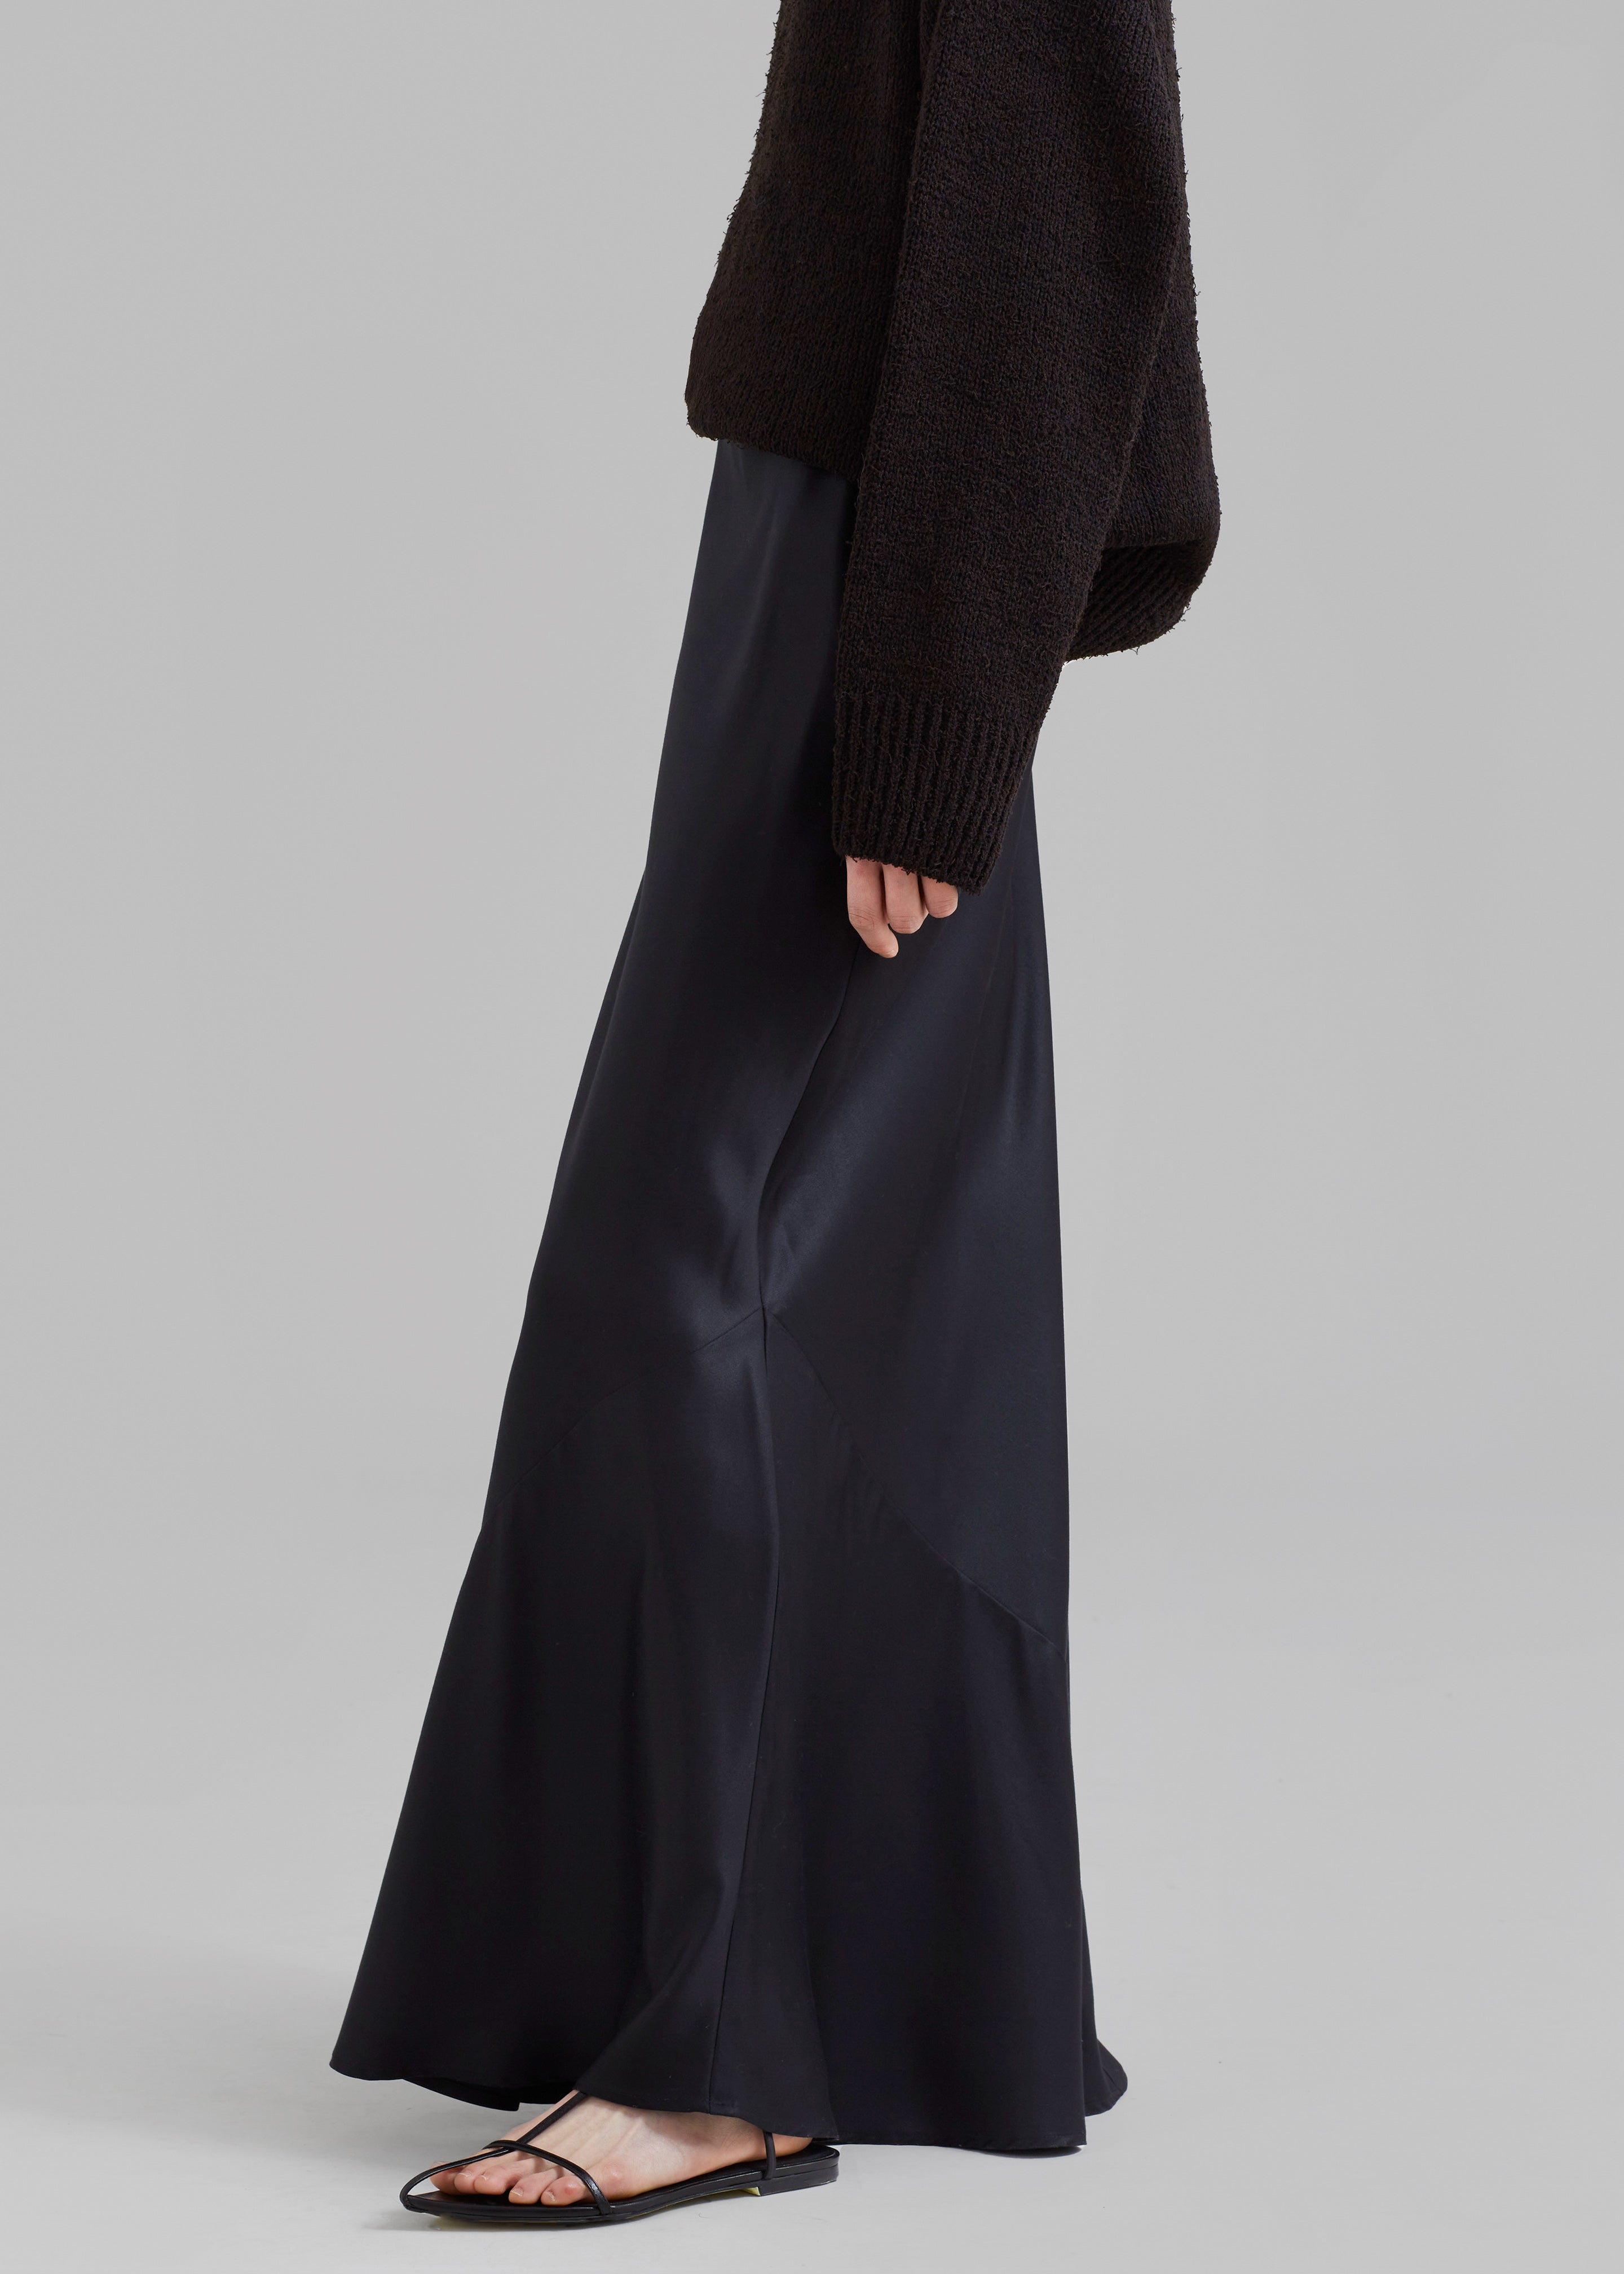 The Garment Bel Air Skirt - Black - 4